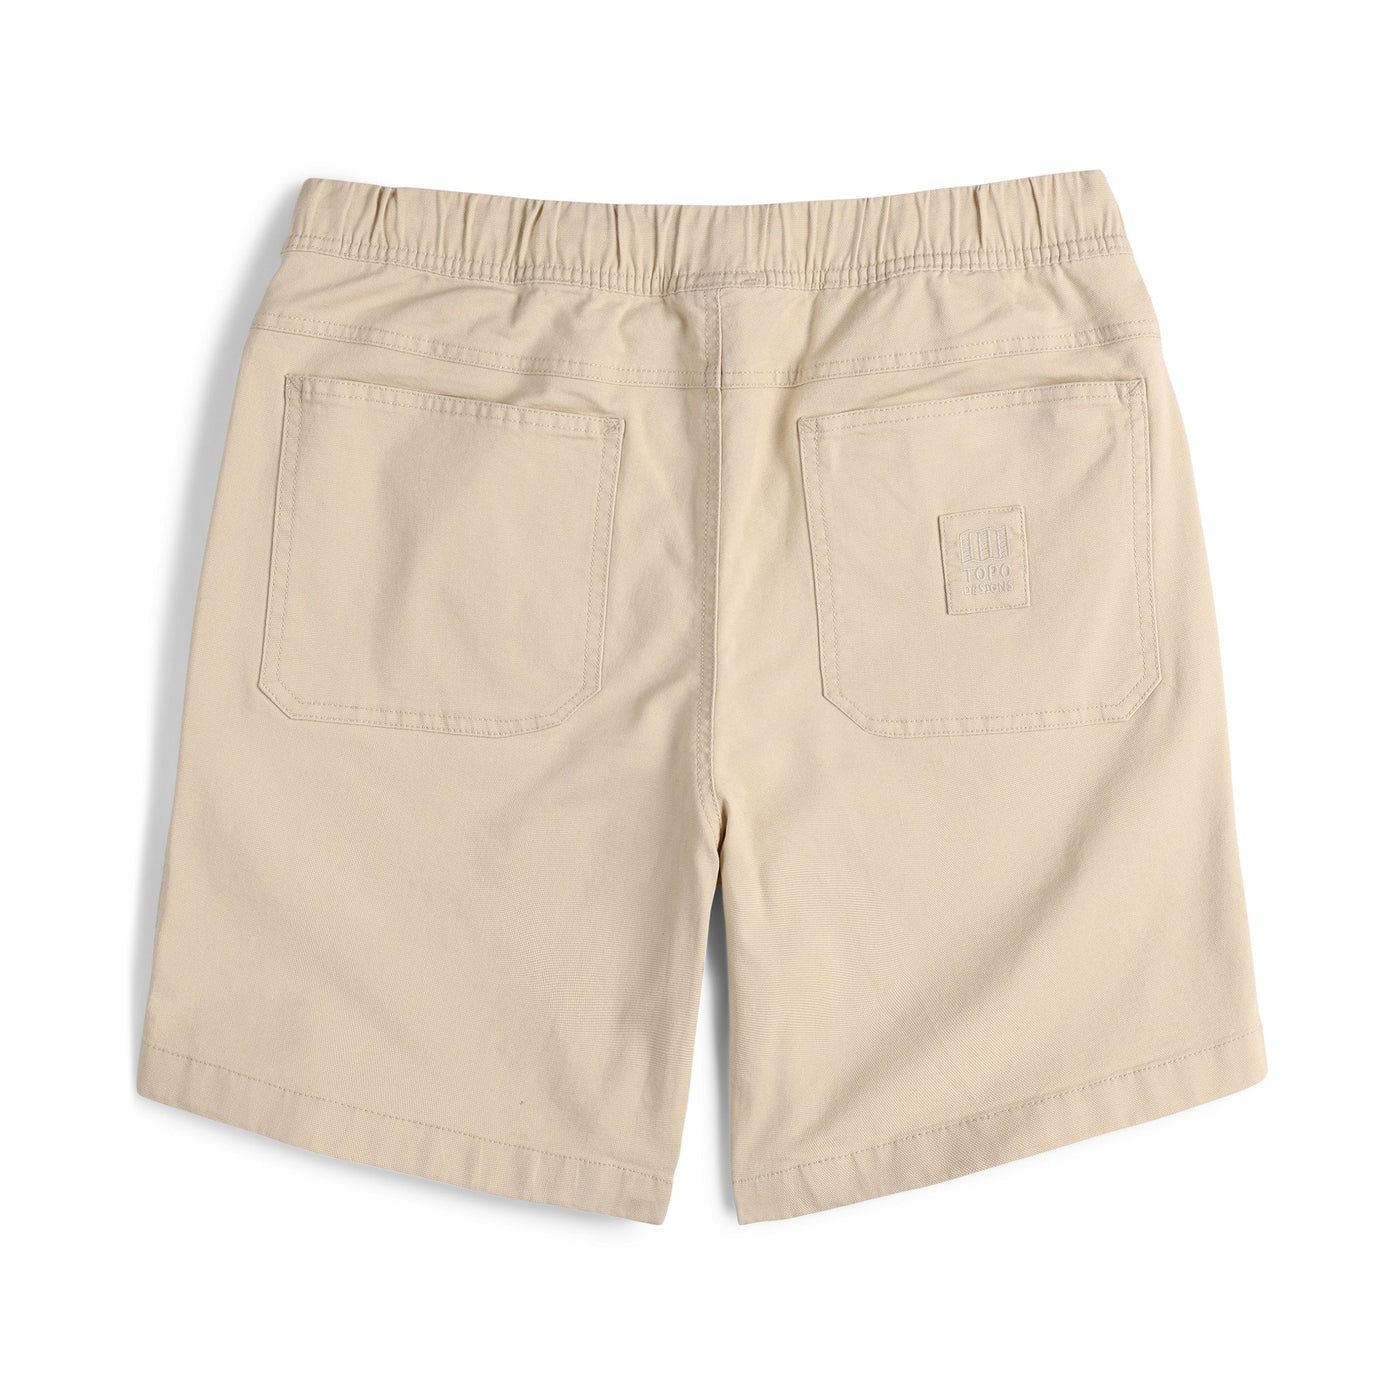 Dirt Shorts - Men's